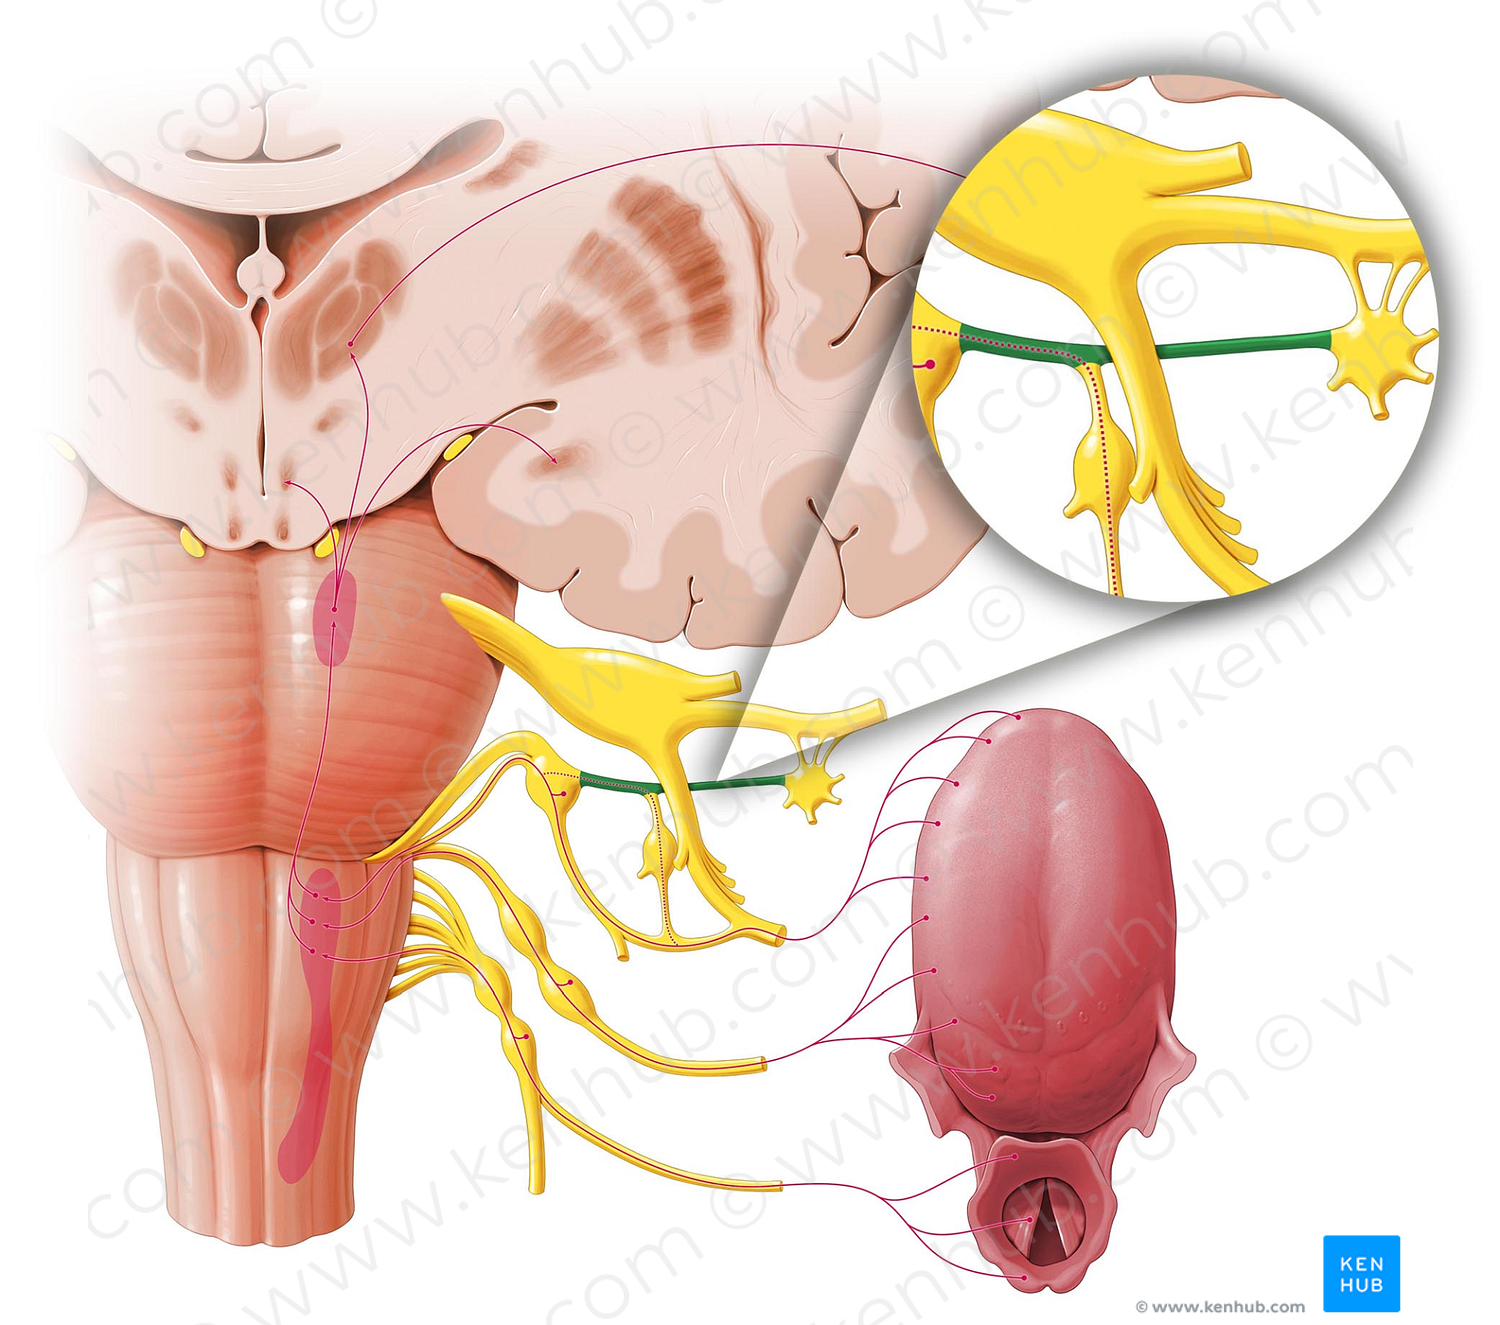 Greater petrosal nerve (#6670)